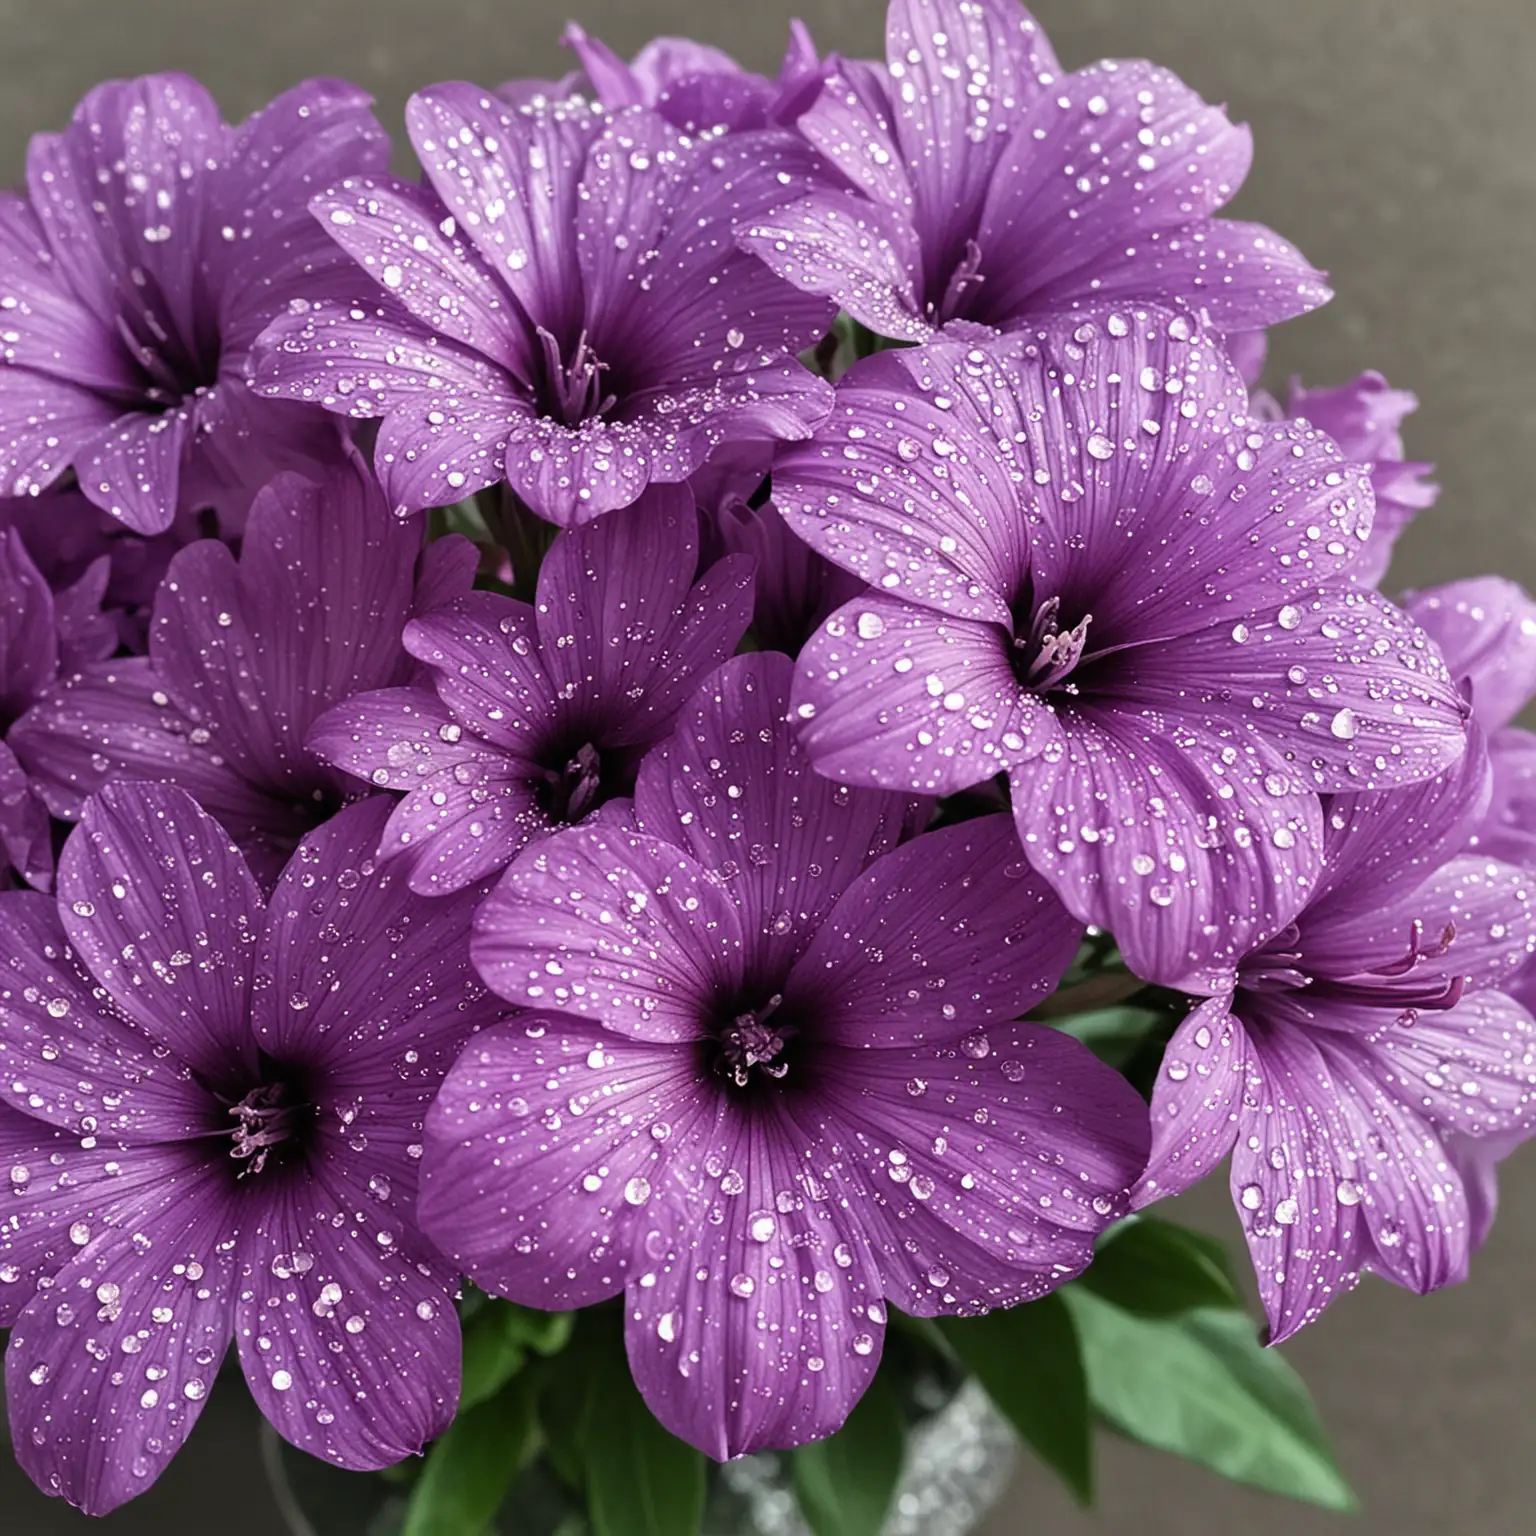 sparkly purple flowers